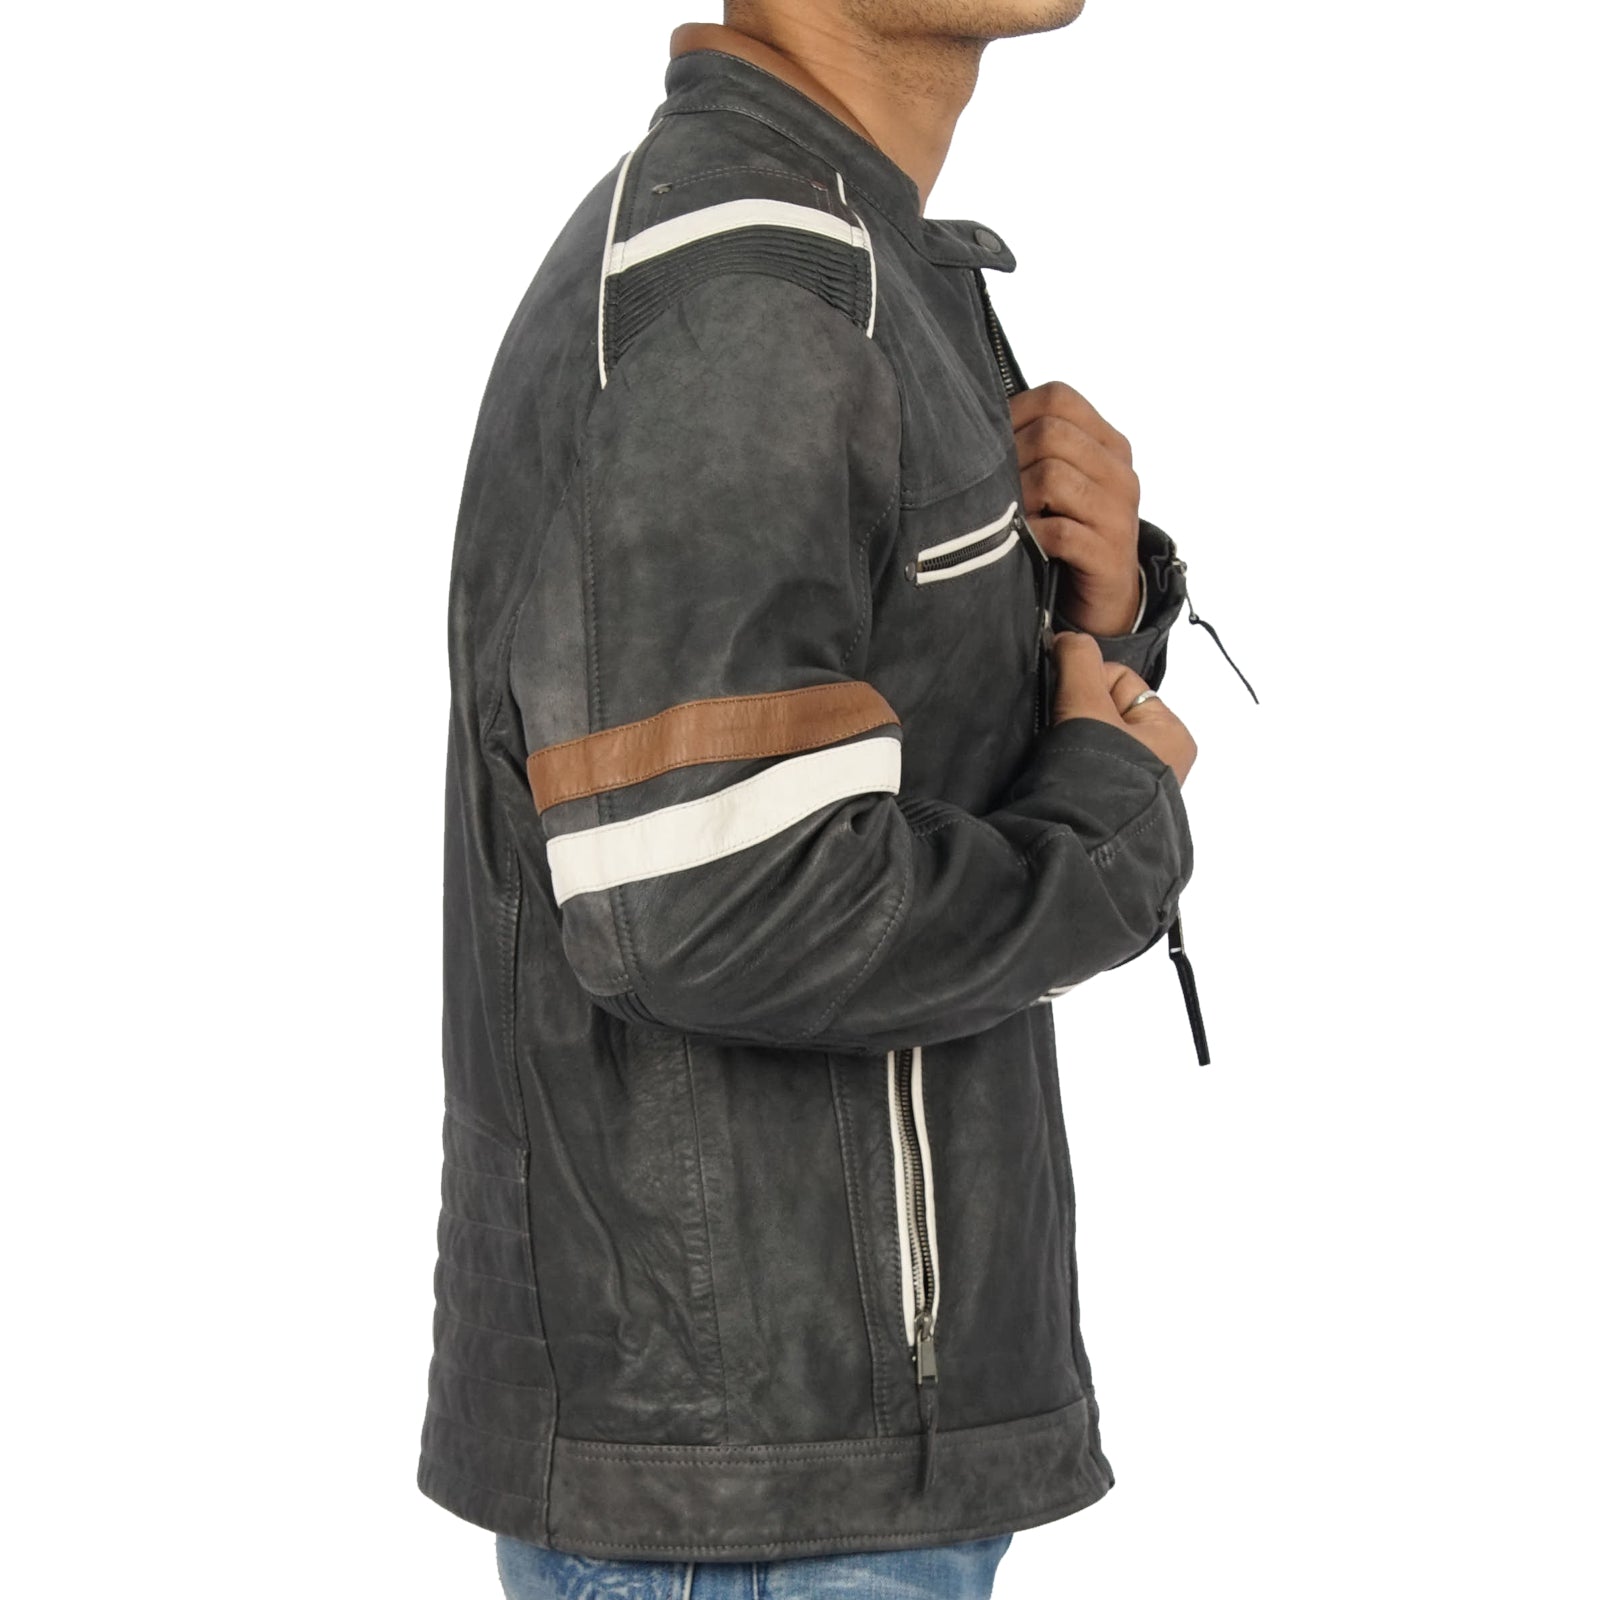 A man wearing black leather jacket